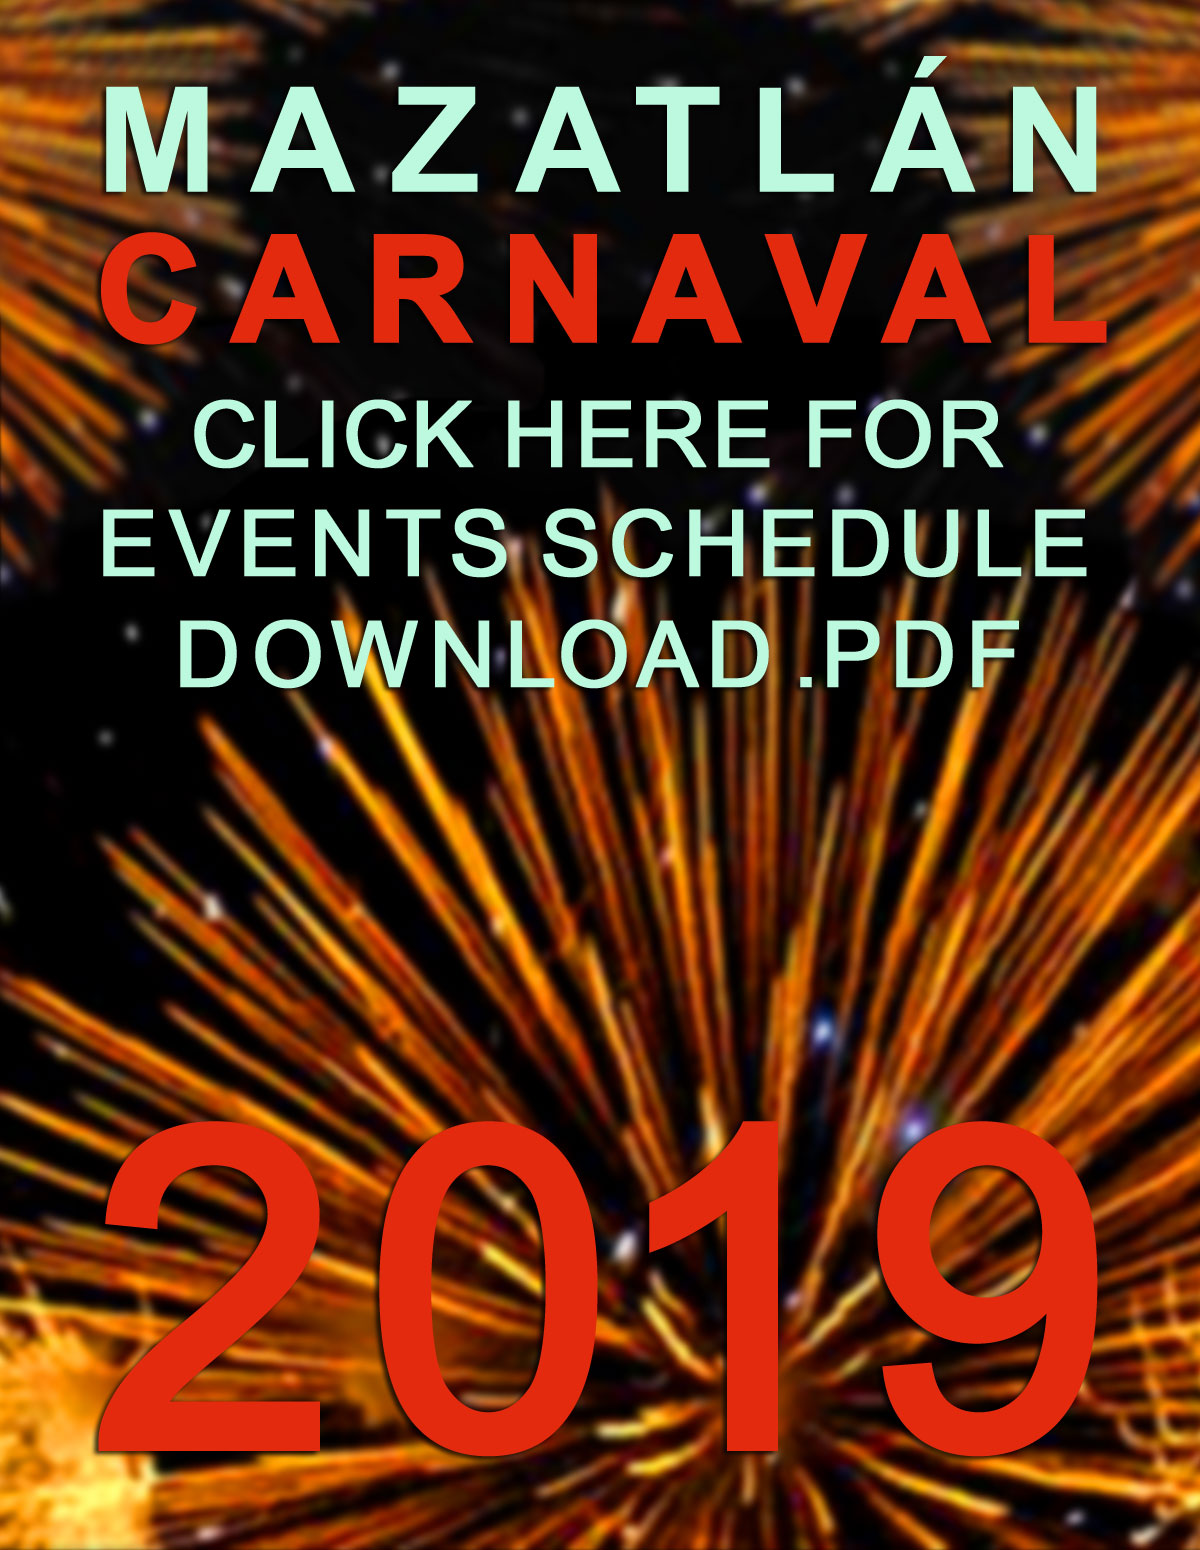 Download free Mazatlan 2019 Carnival events schedule